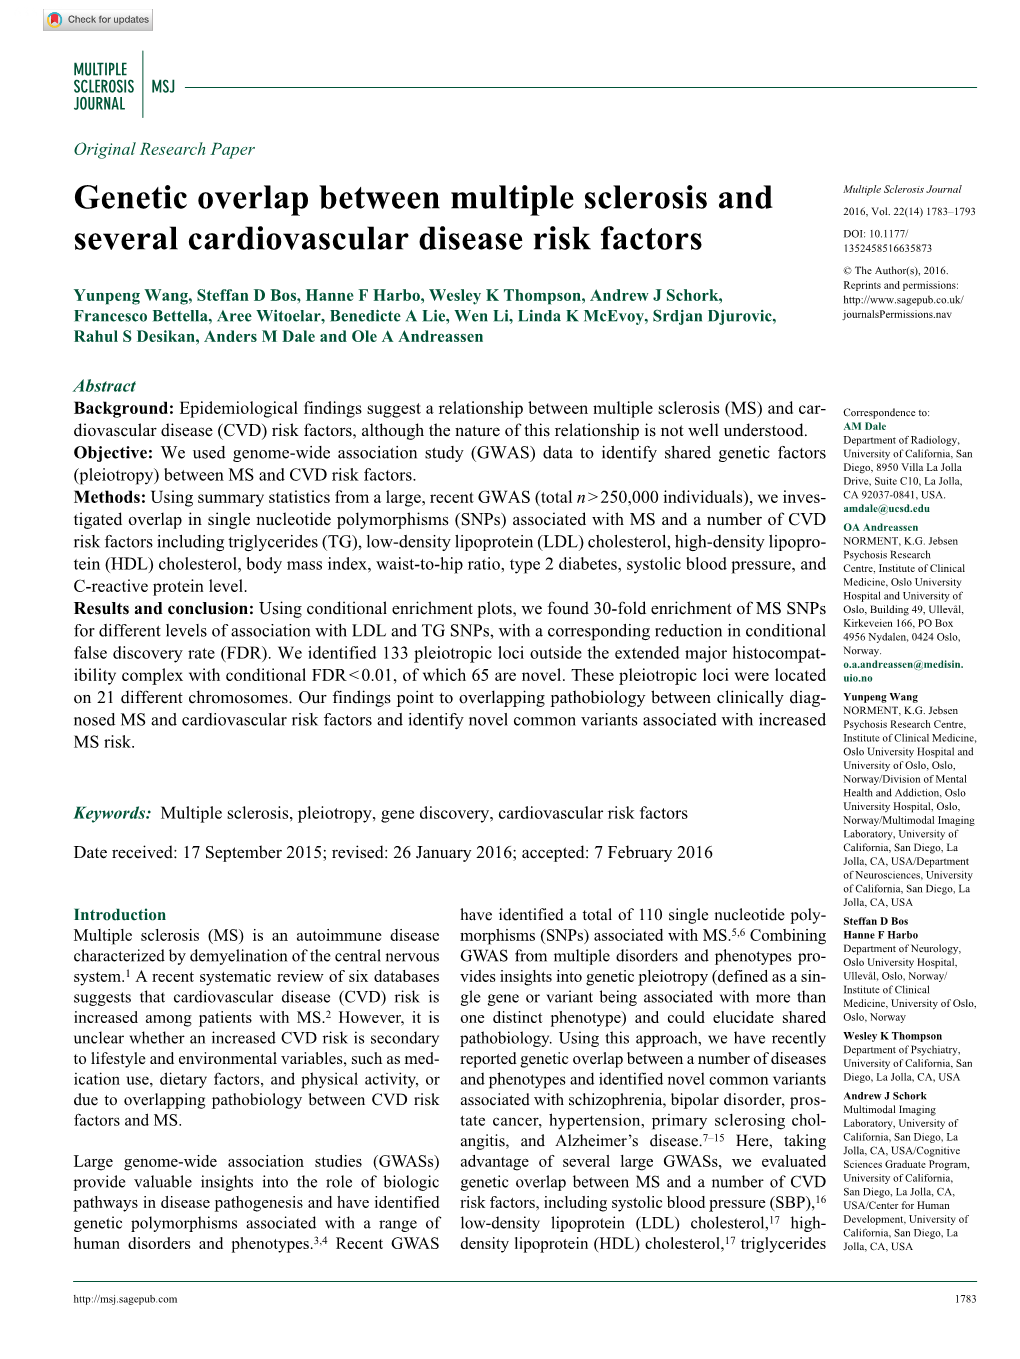 Genetic Overlap Between Multiple Sclerosis and Several Cardiovascular Disease Risk Factors